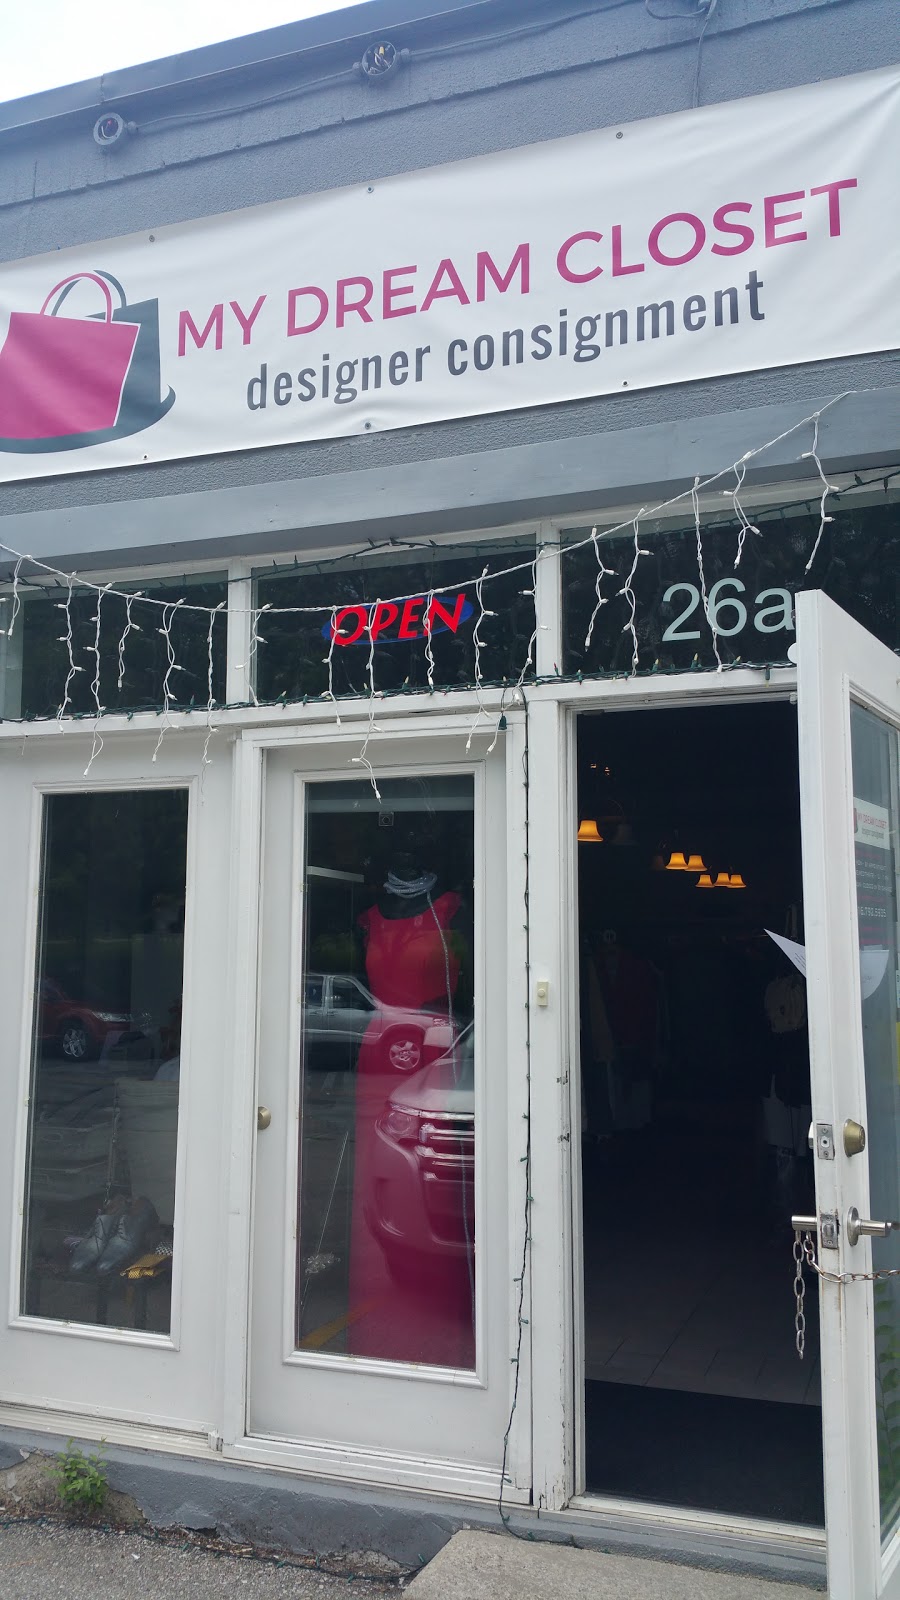 My Dream Closet | 26A Ripley Ave, Toronto, ON M6S 3N9, Canada